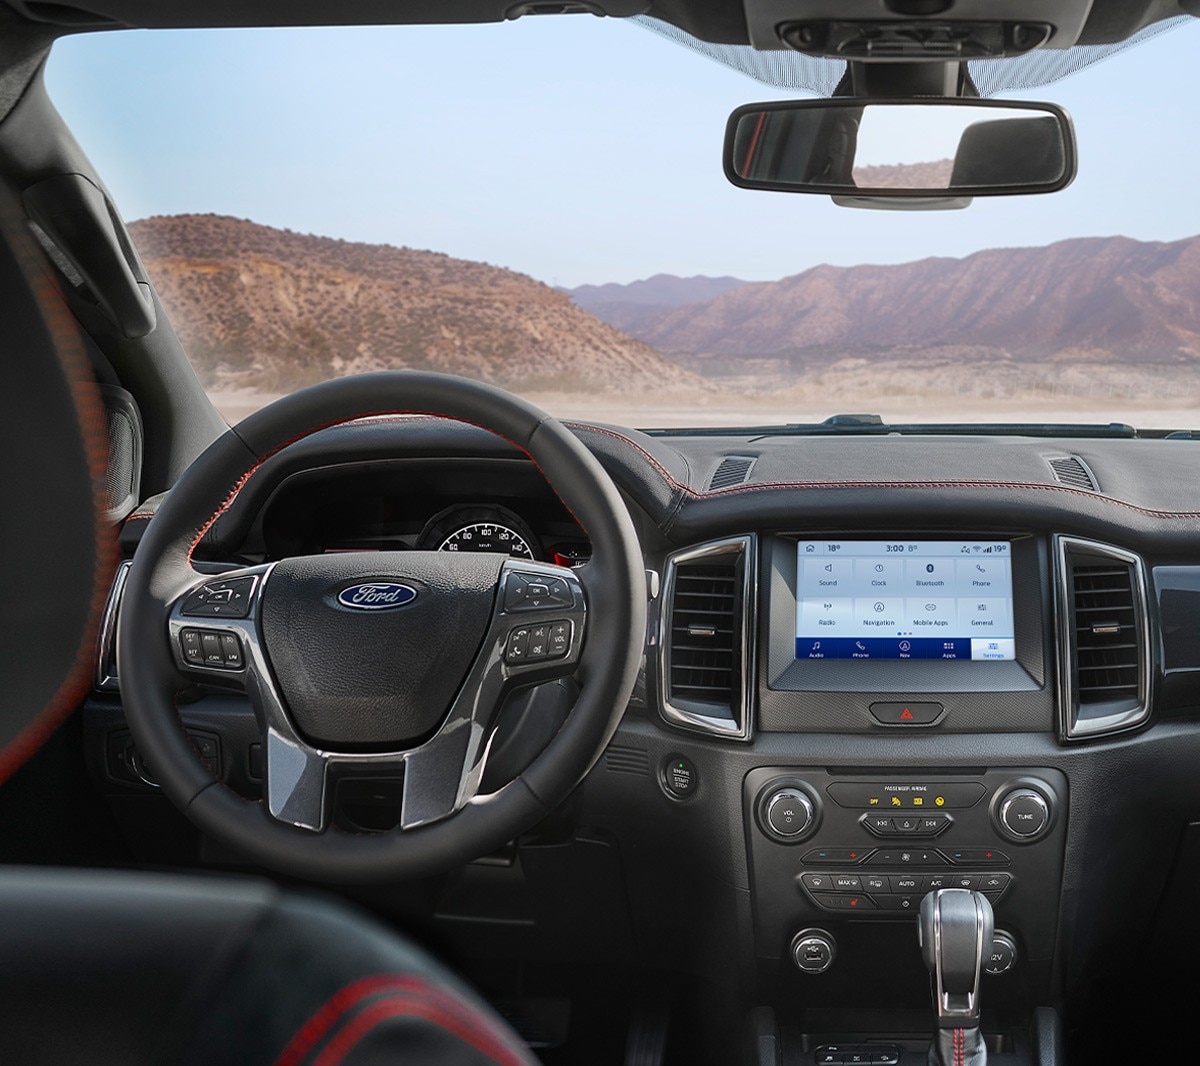 Ford Ranger Stormtrak interior view